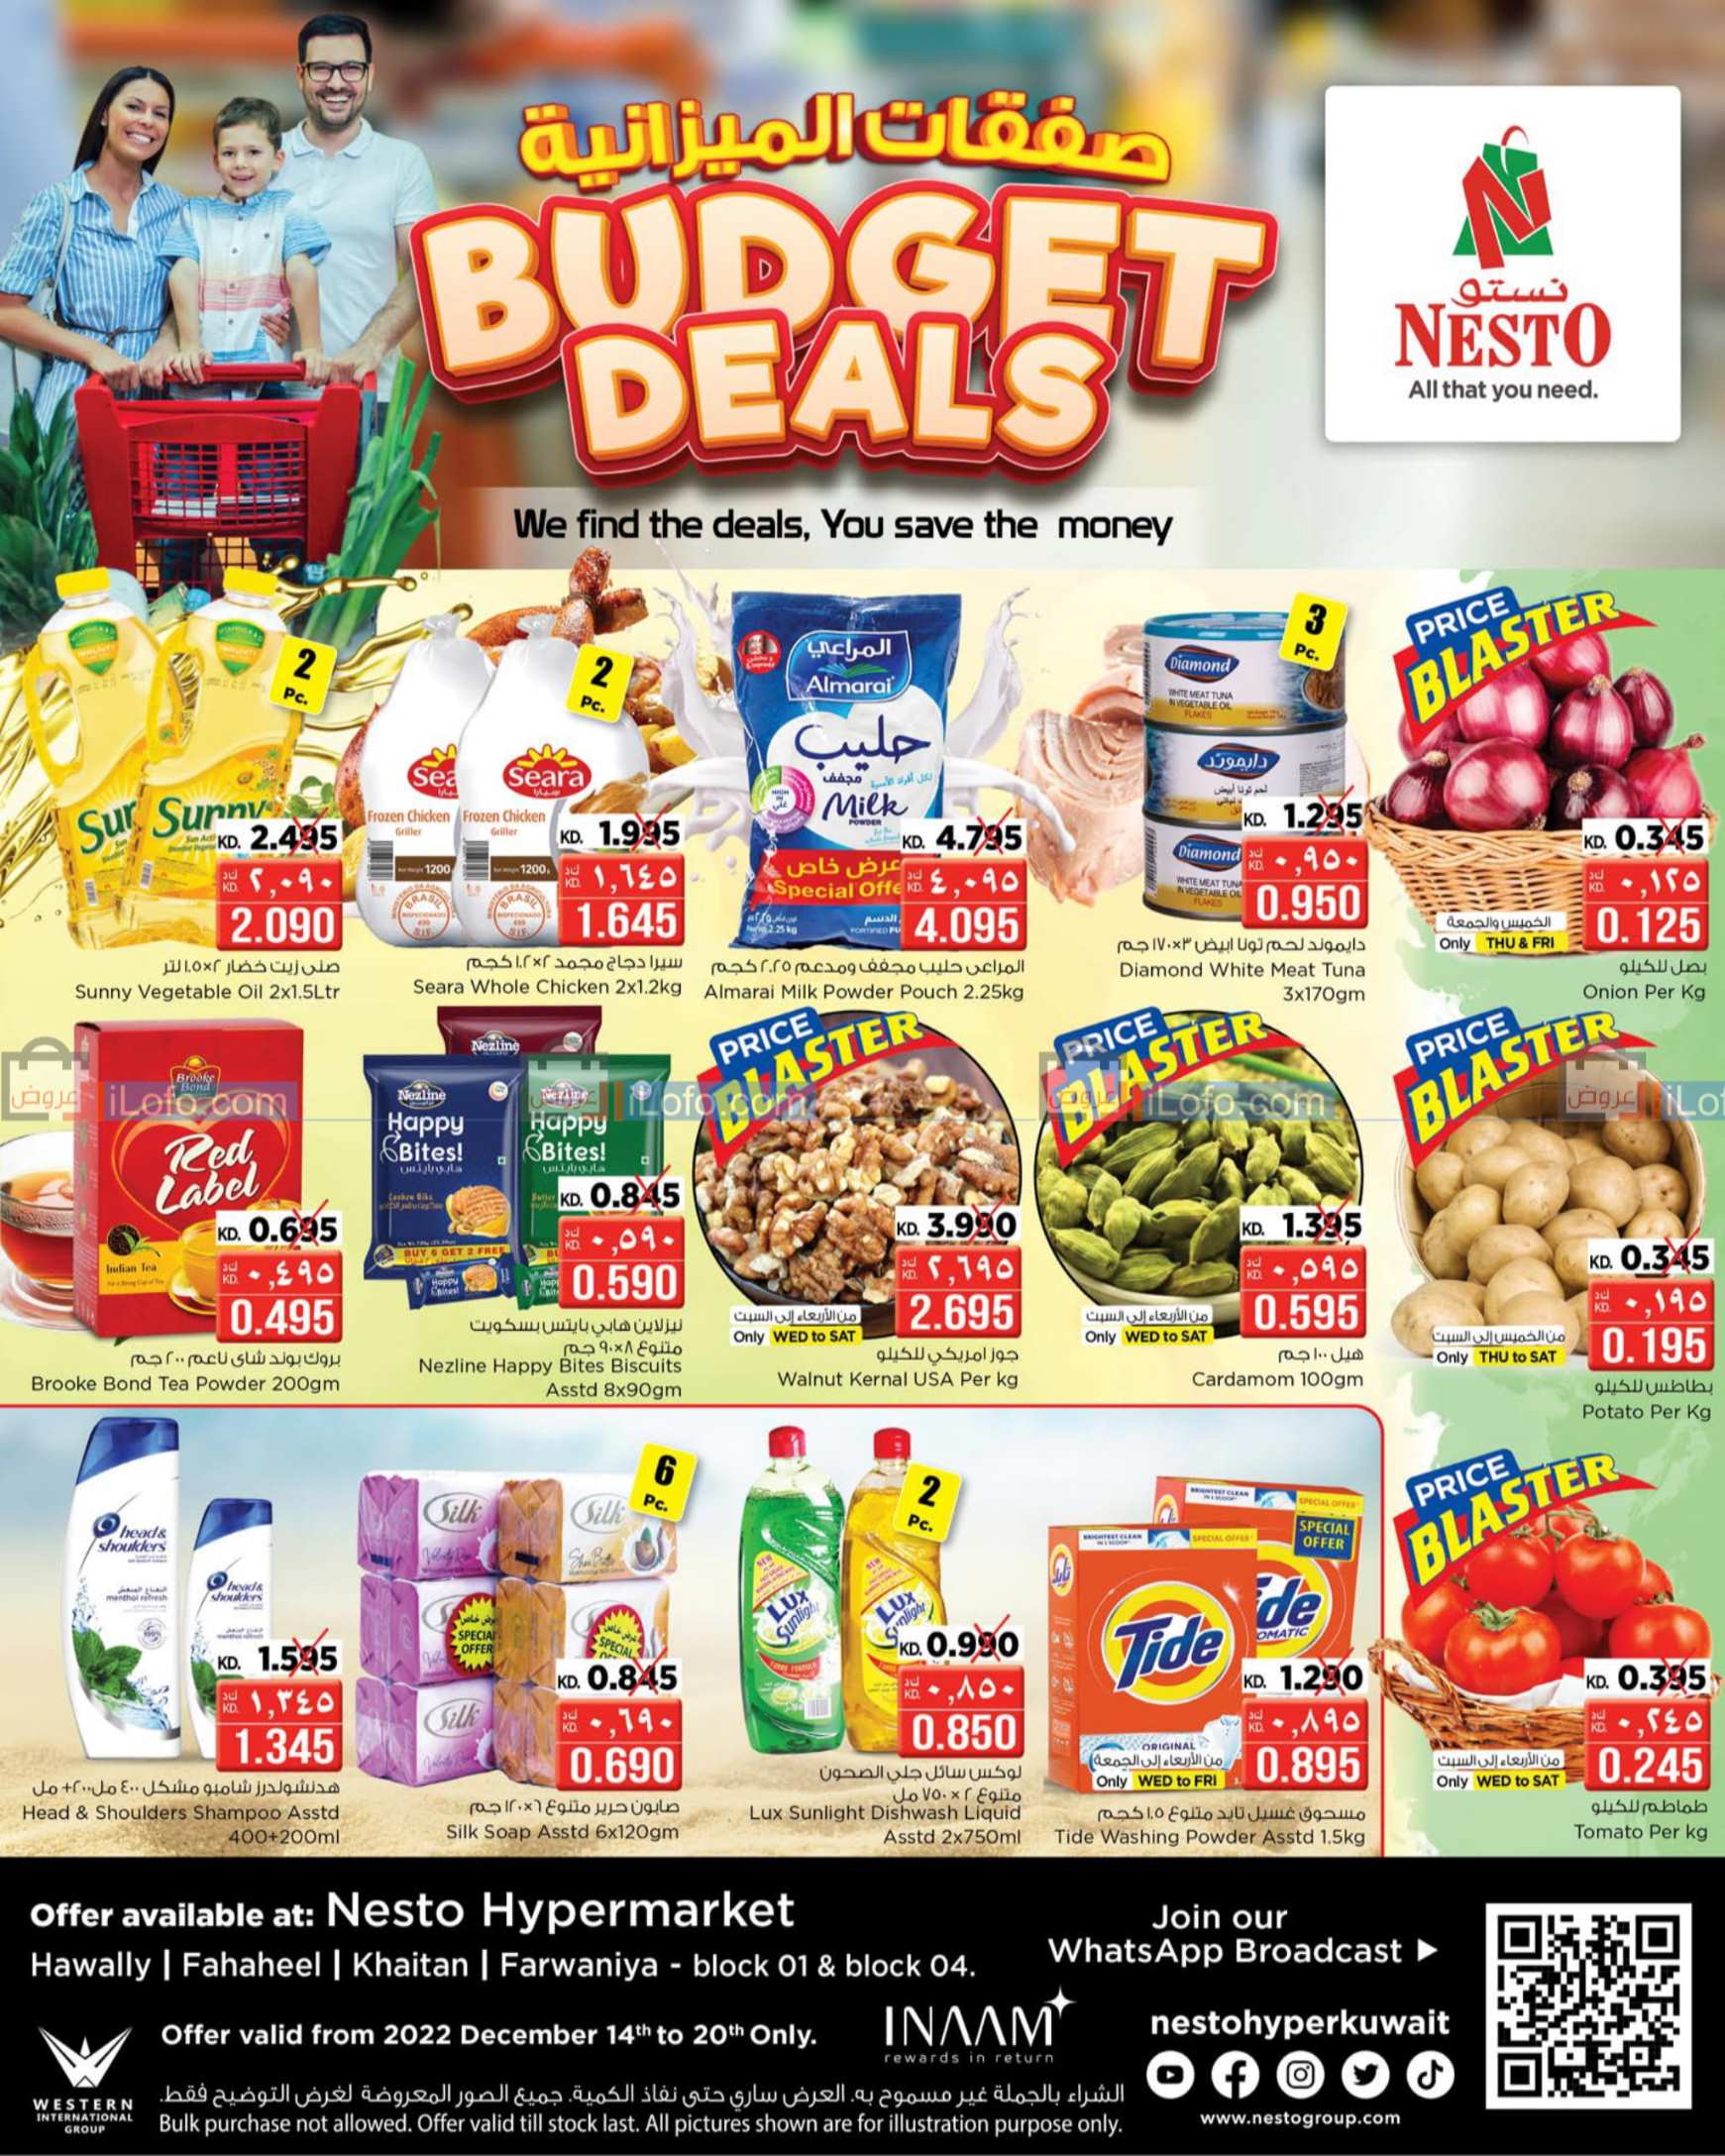 Page 1 at Budget Deals at Nesto hypermarket Kuwait 